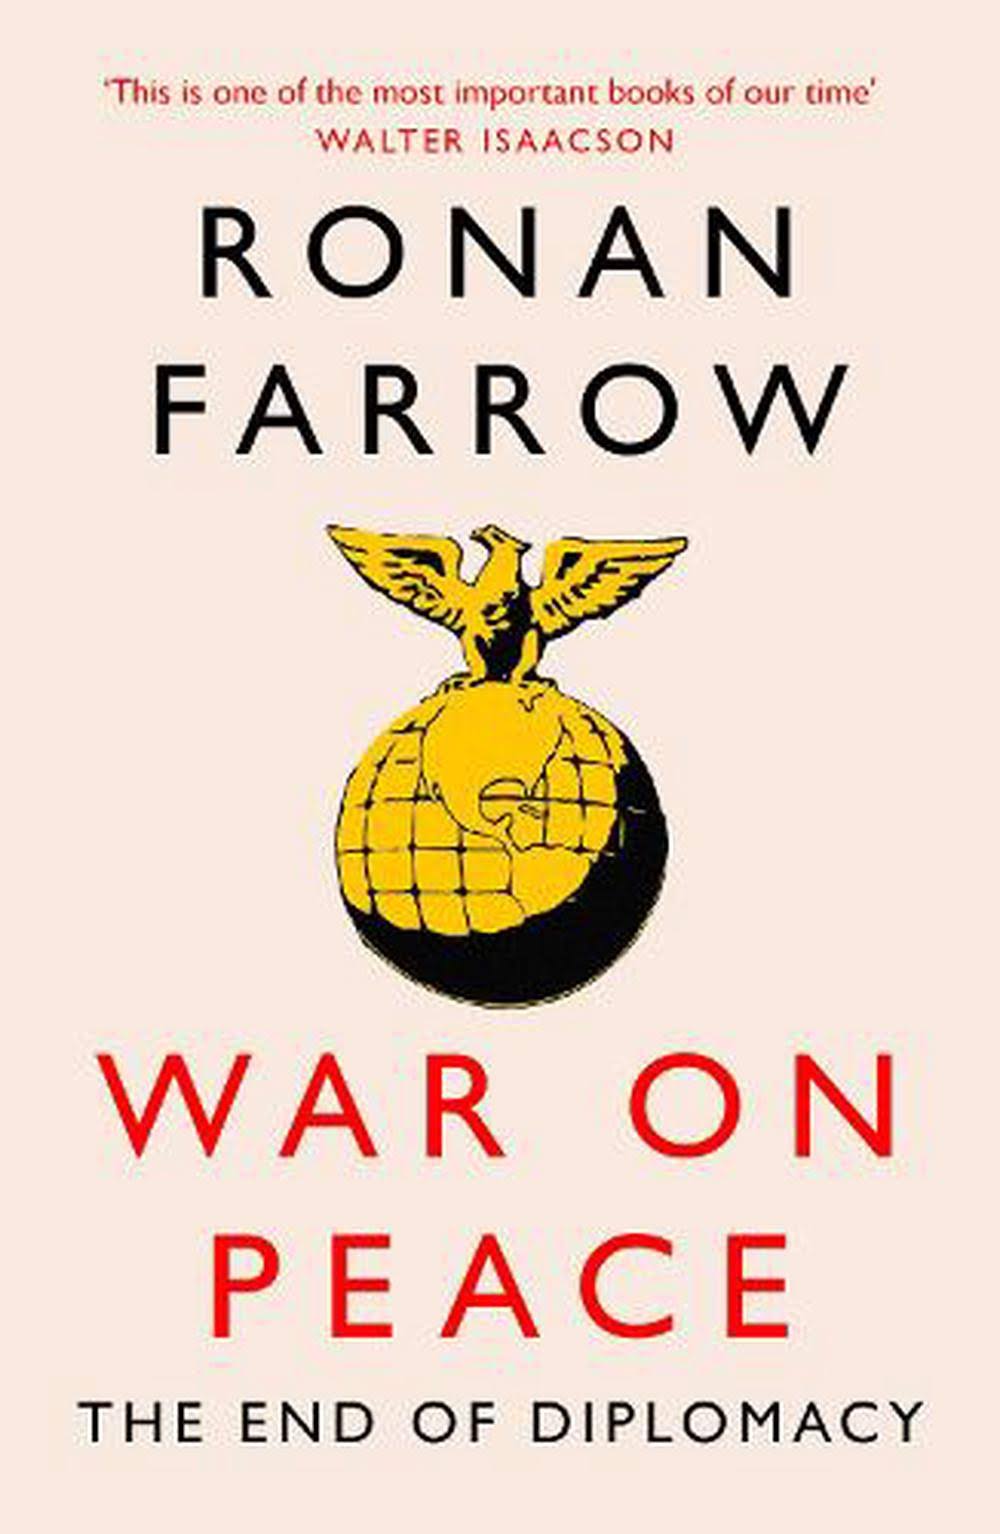 War On Peace: The Decline of American Influence by Ronan Farrow